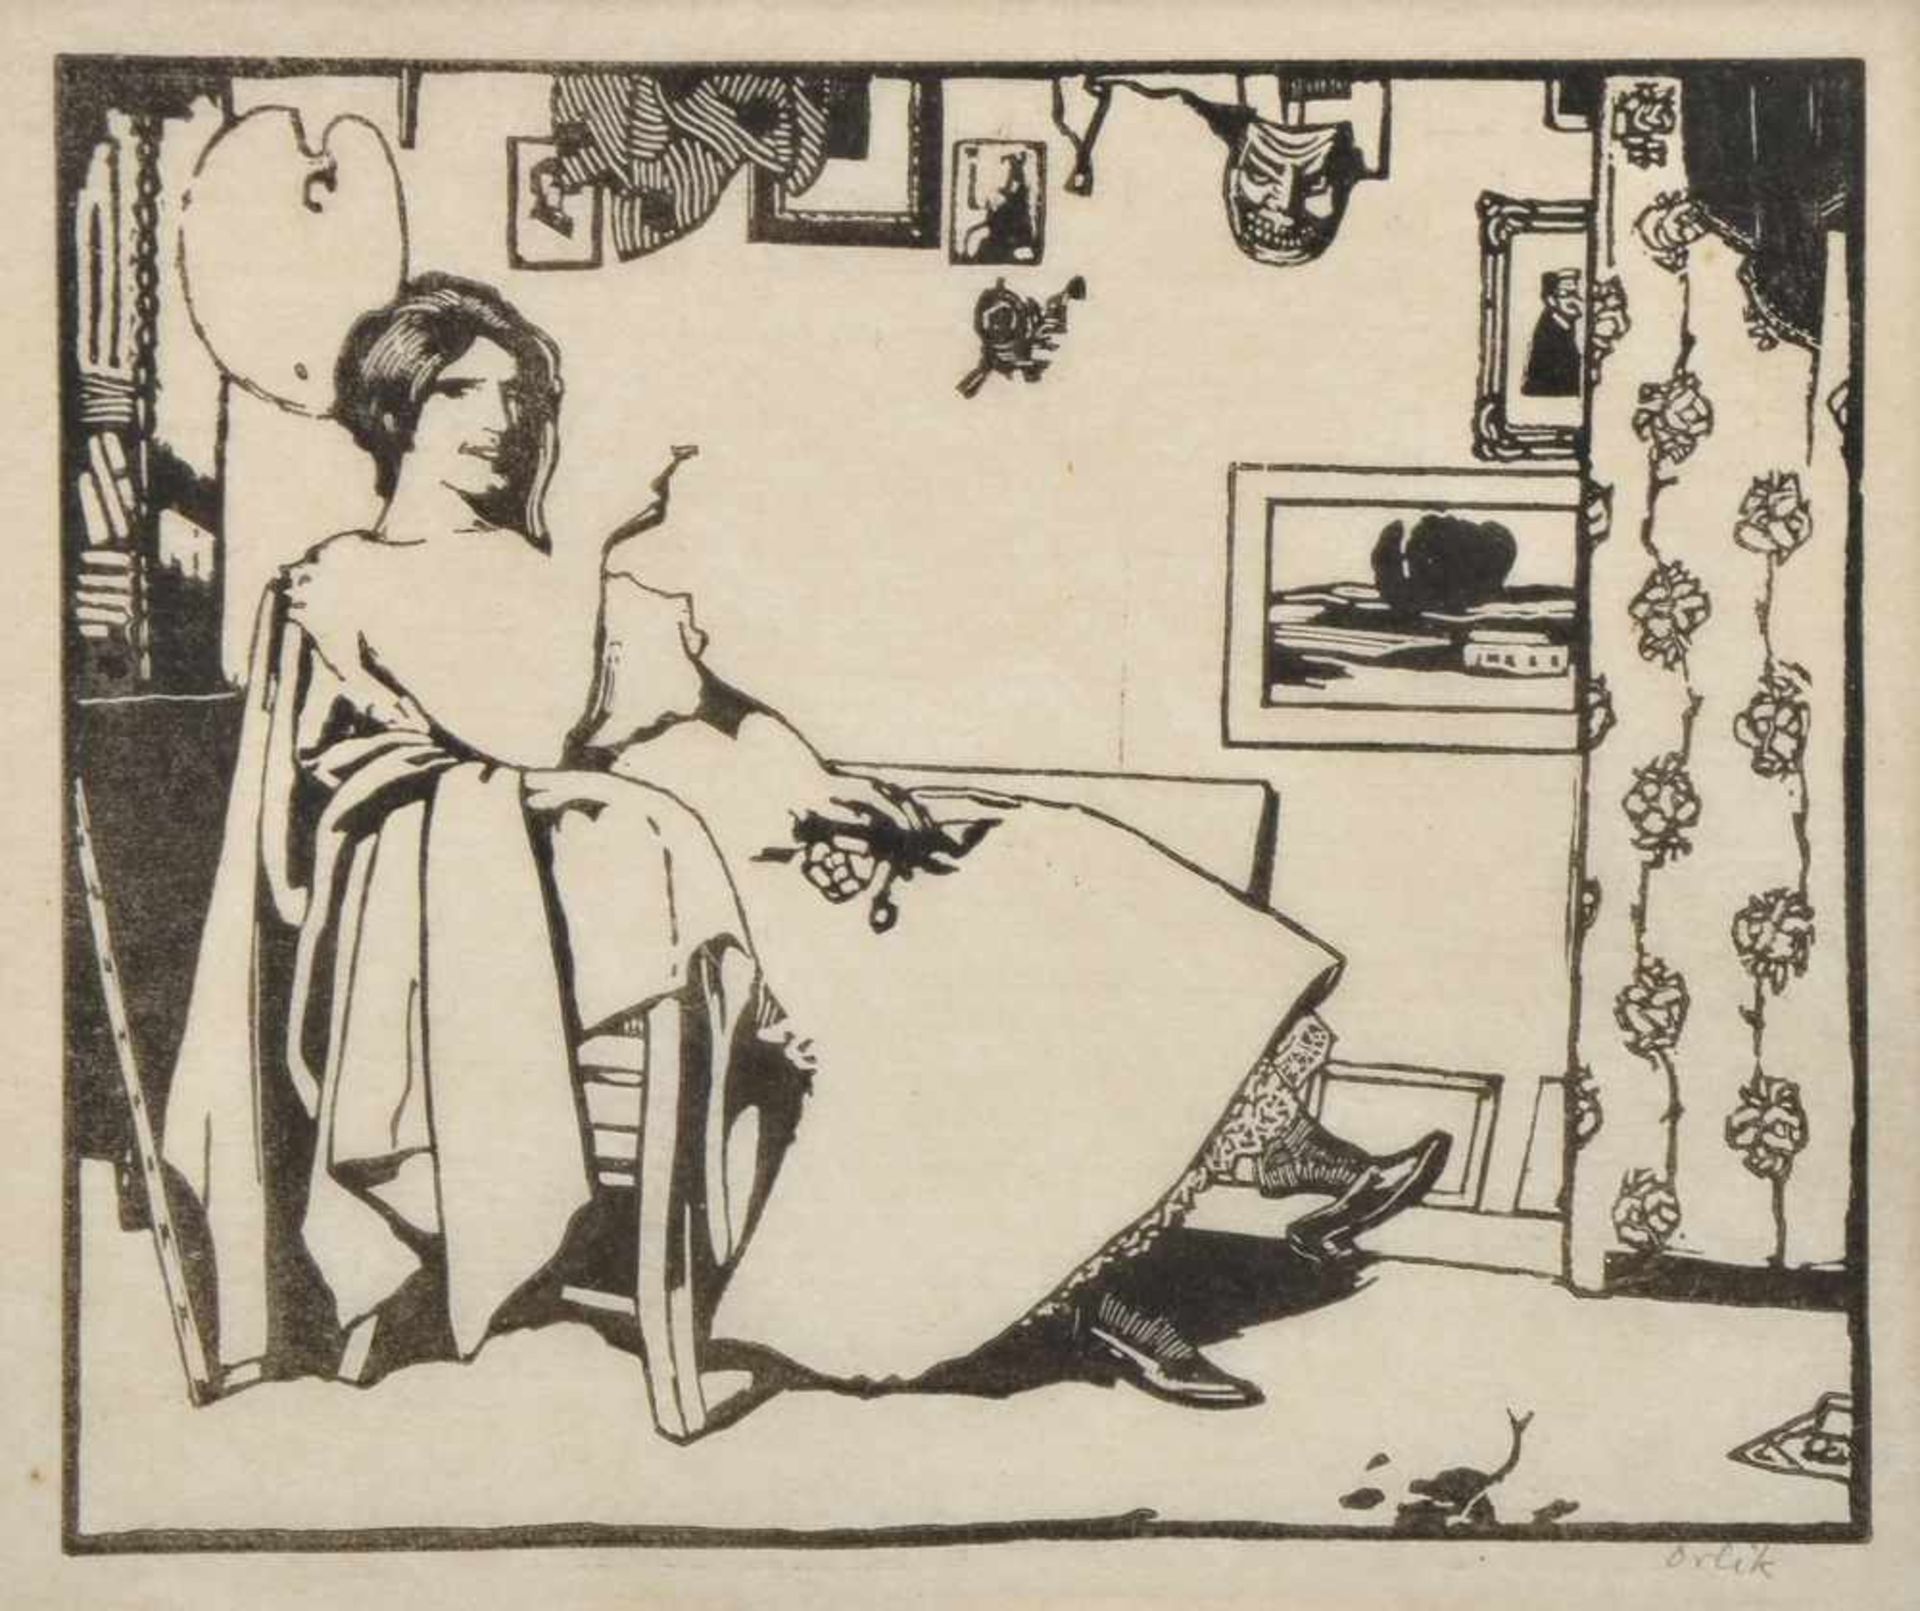 Orlik, Emil (1870-1932) "Rauchendes Modell in Atelier" 1899, Linolschnitt/Probedruck, u.r.sign.,